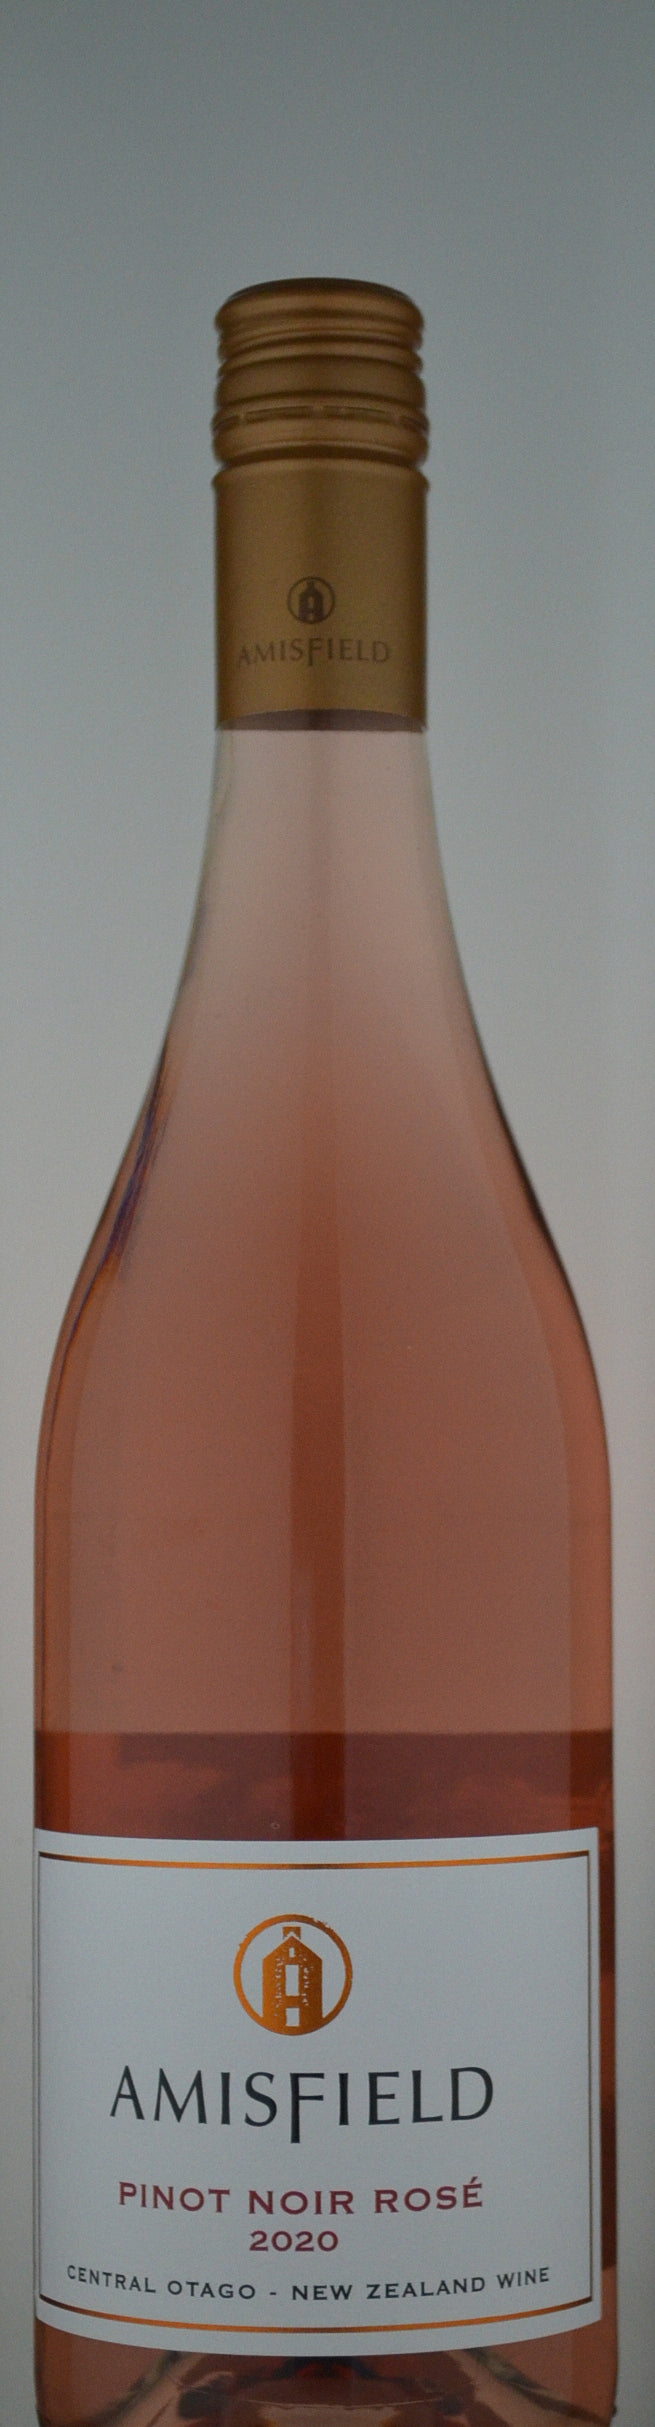 Amisfield Pinot Noir Rose 2020